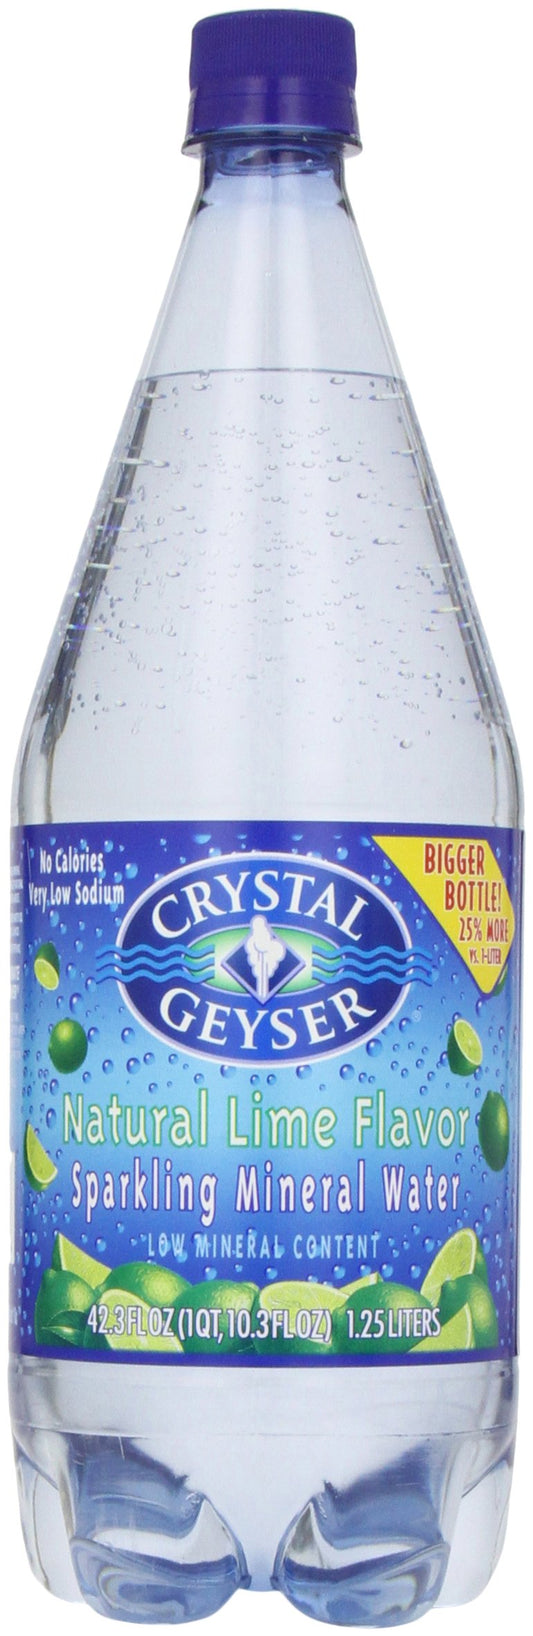 Crystal Geyser Mineral Water, Lime, 42.3 Fl Oz